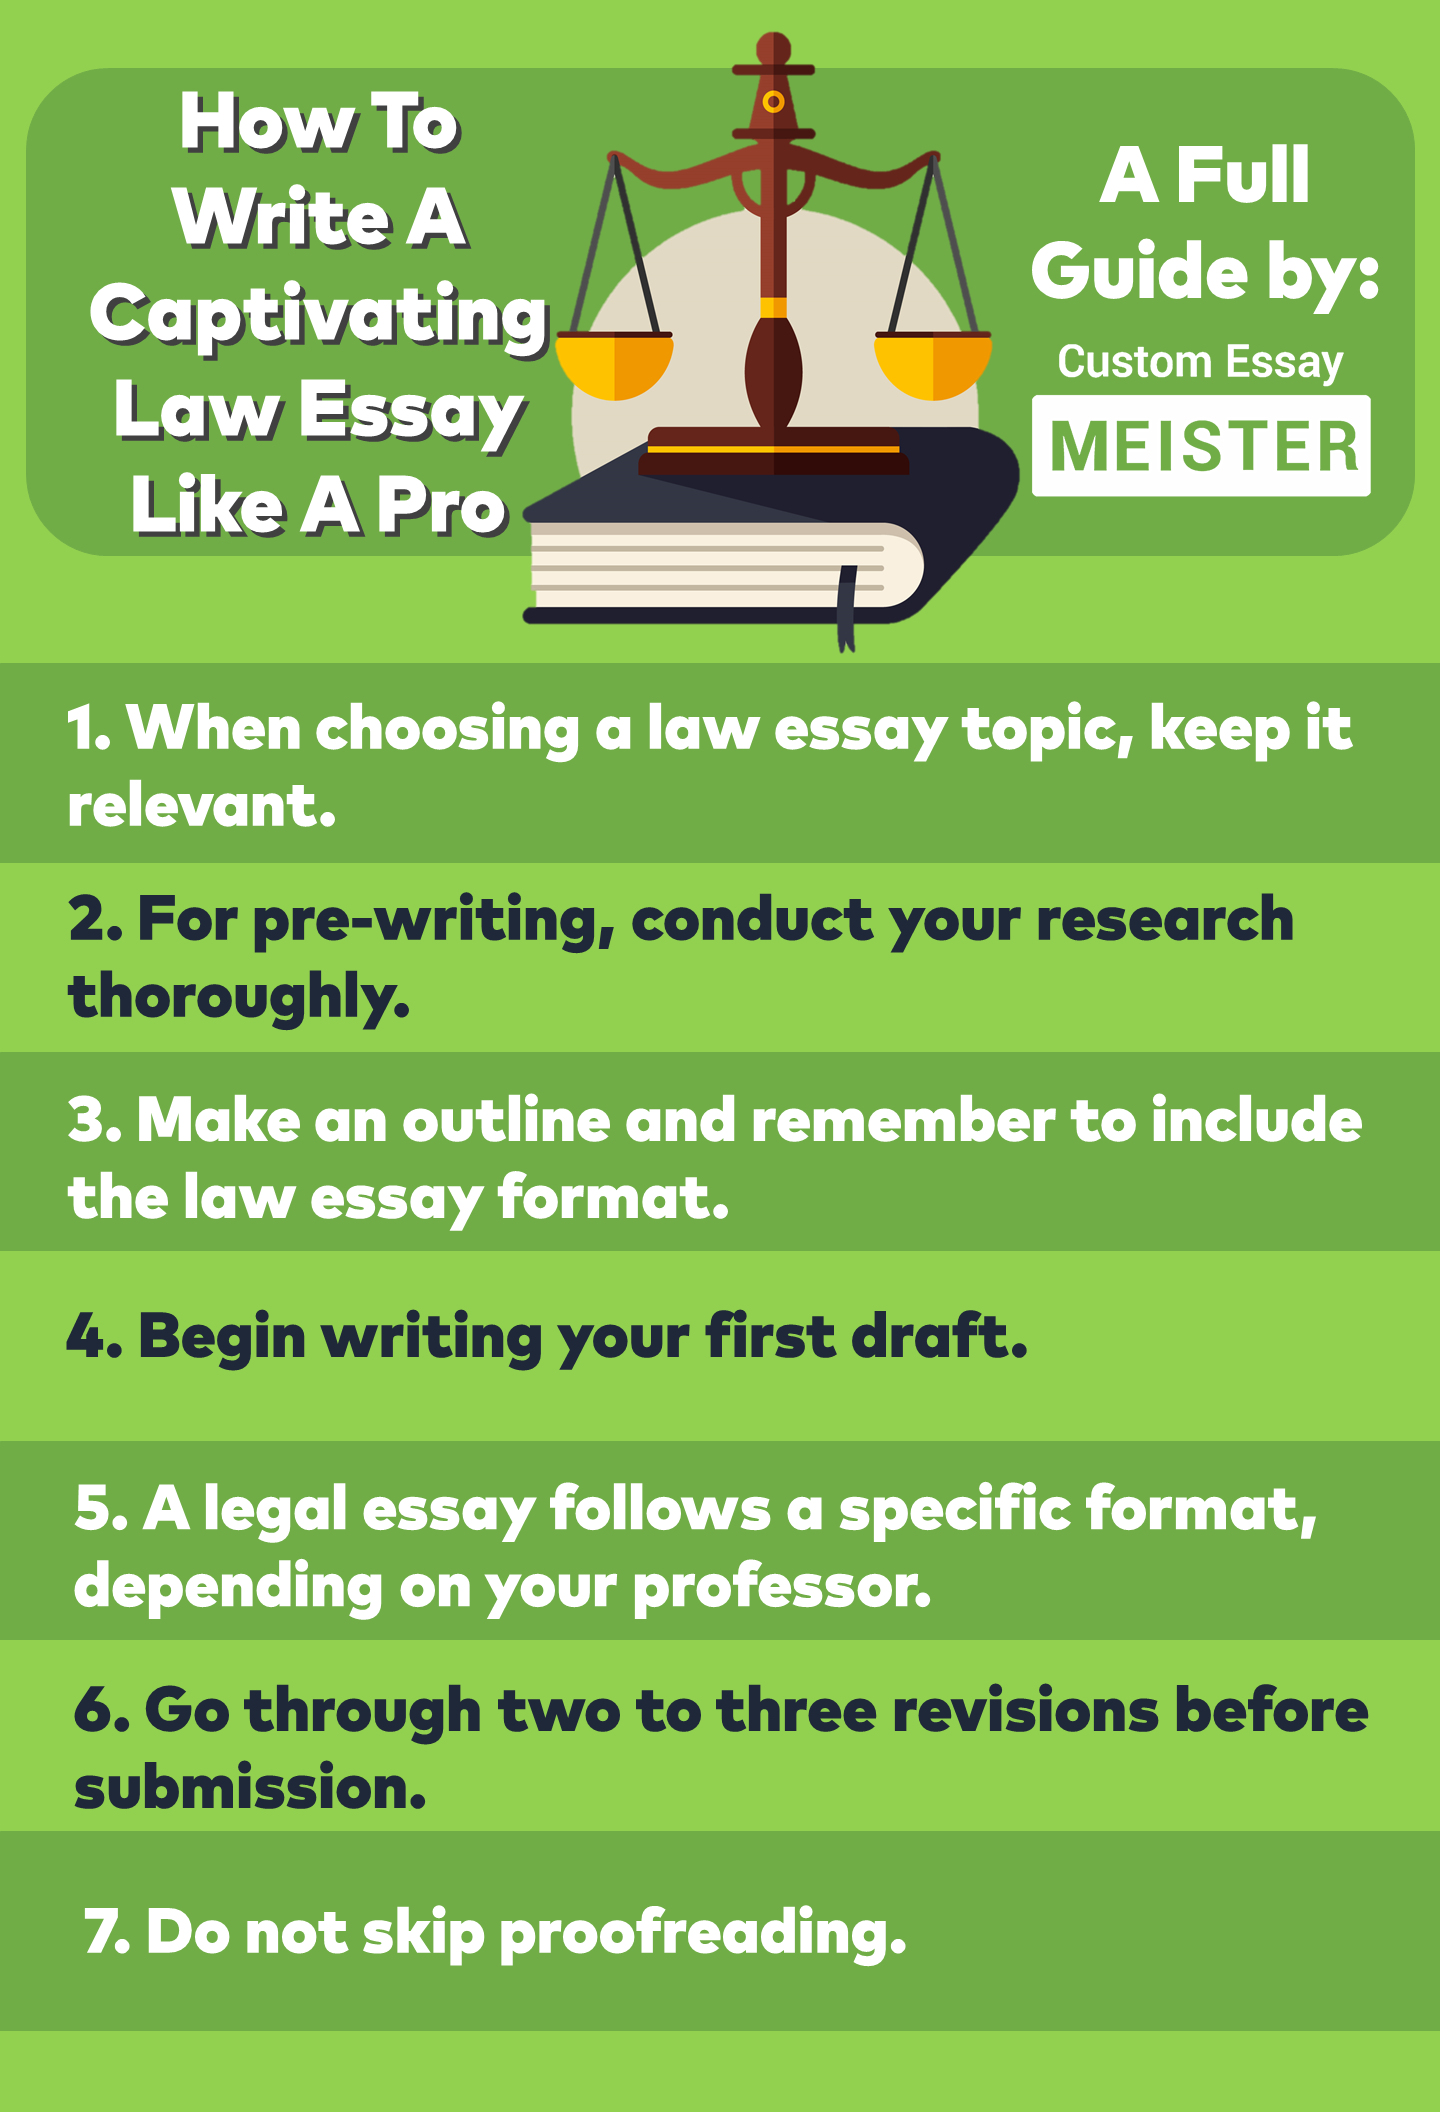 methods of legal writing